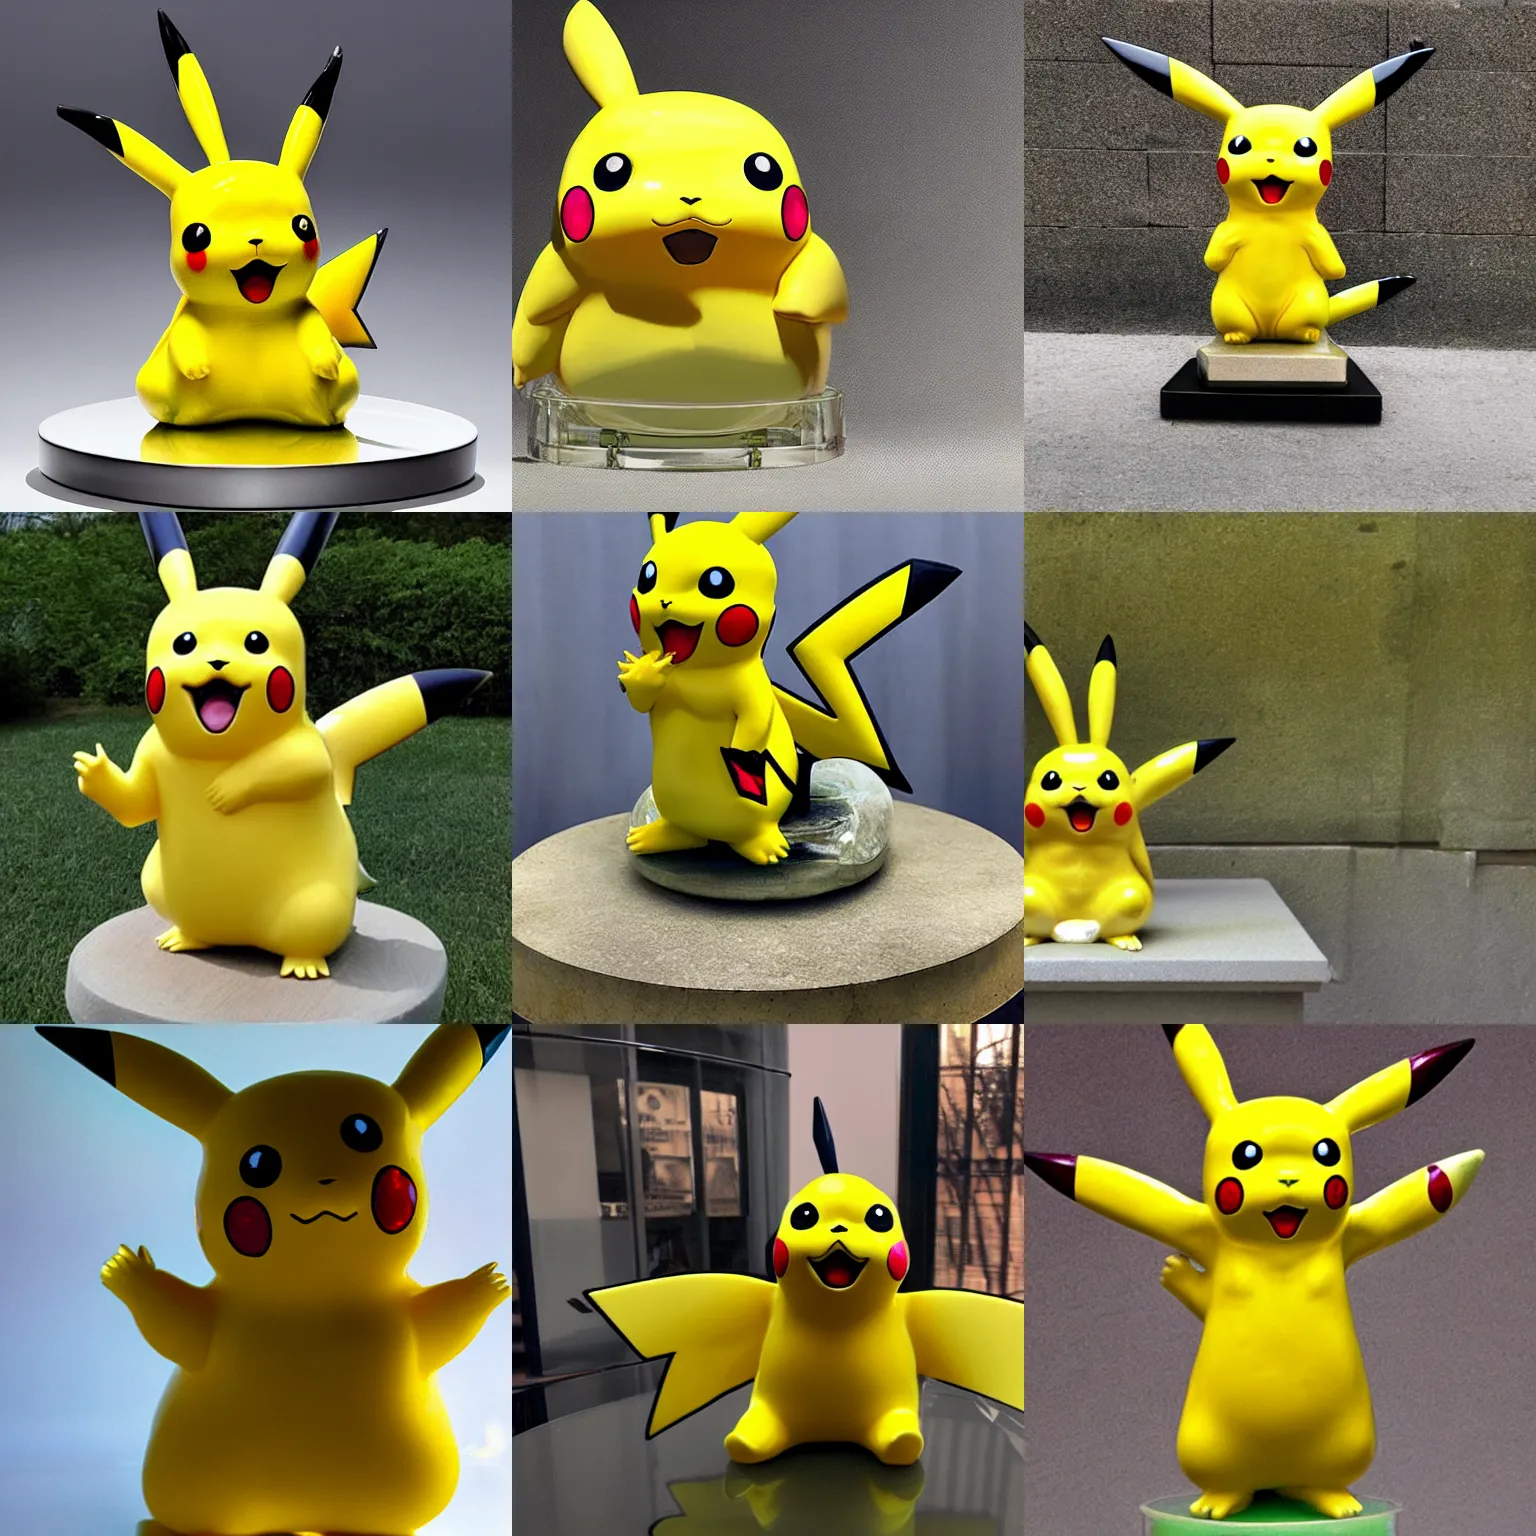 Prompt: a glass statue of pikachu